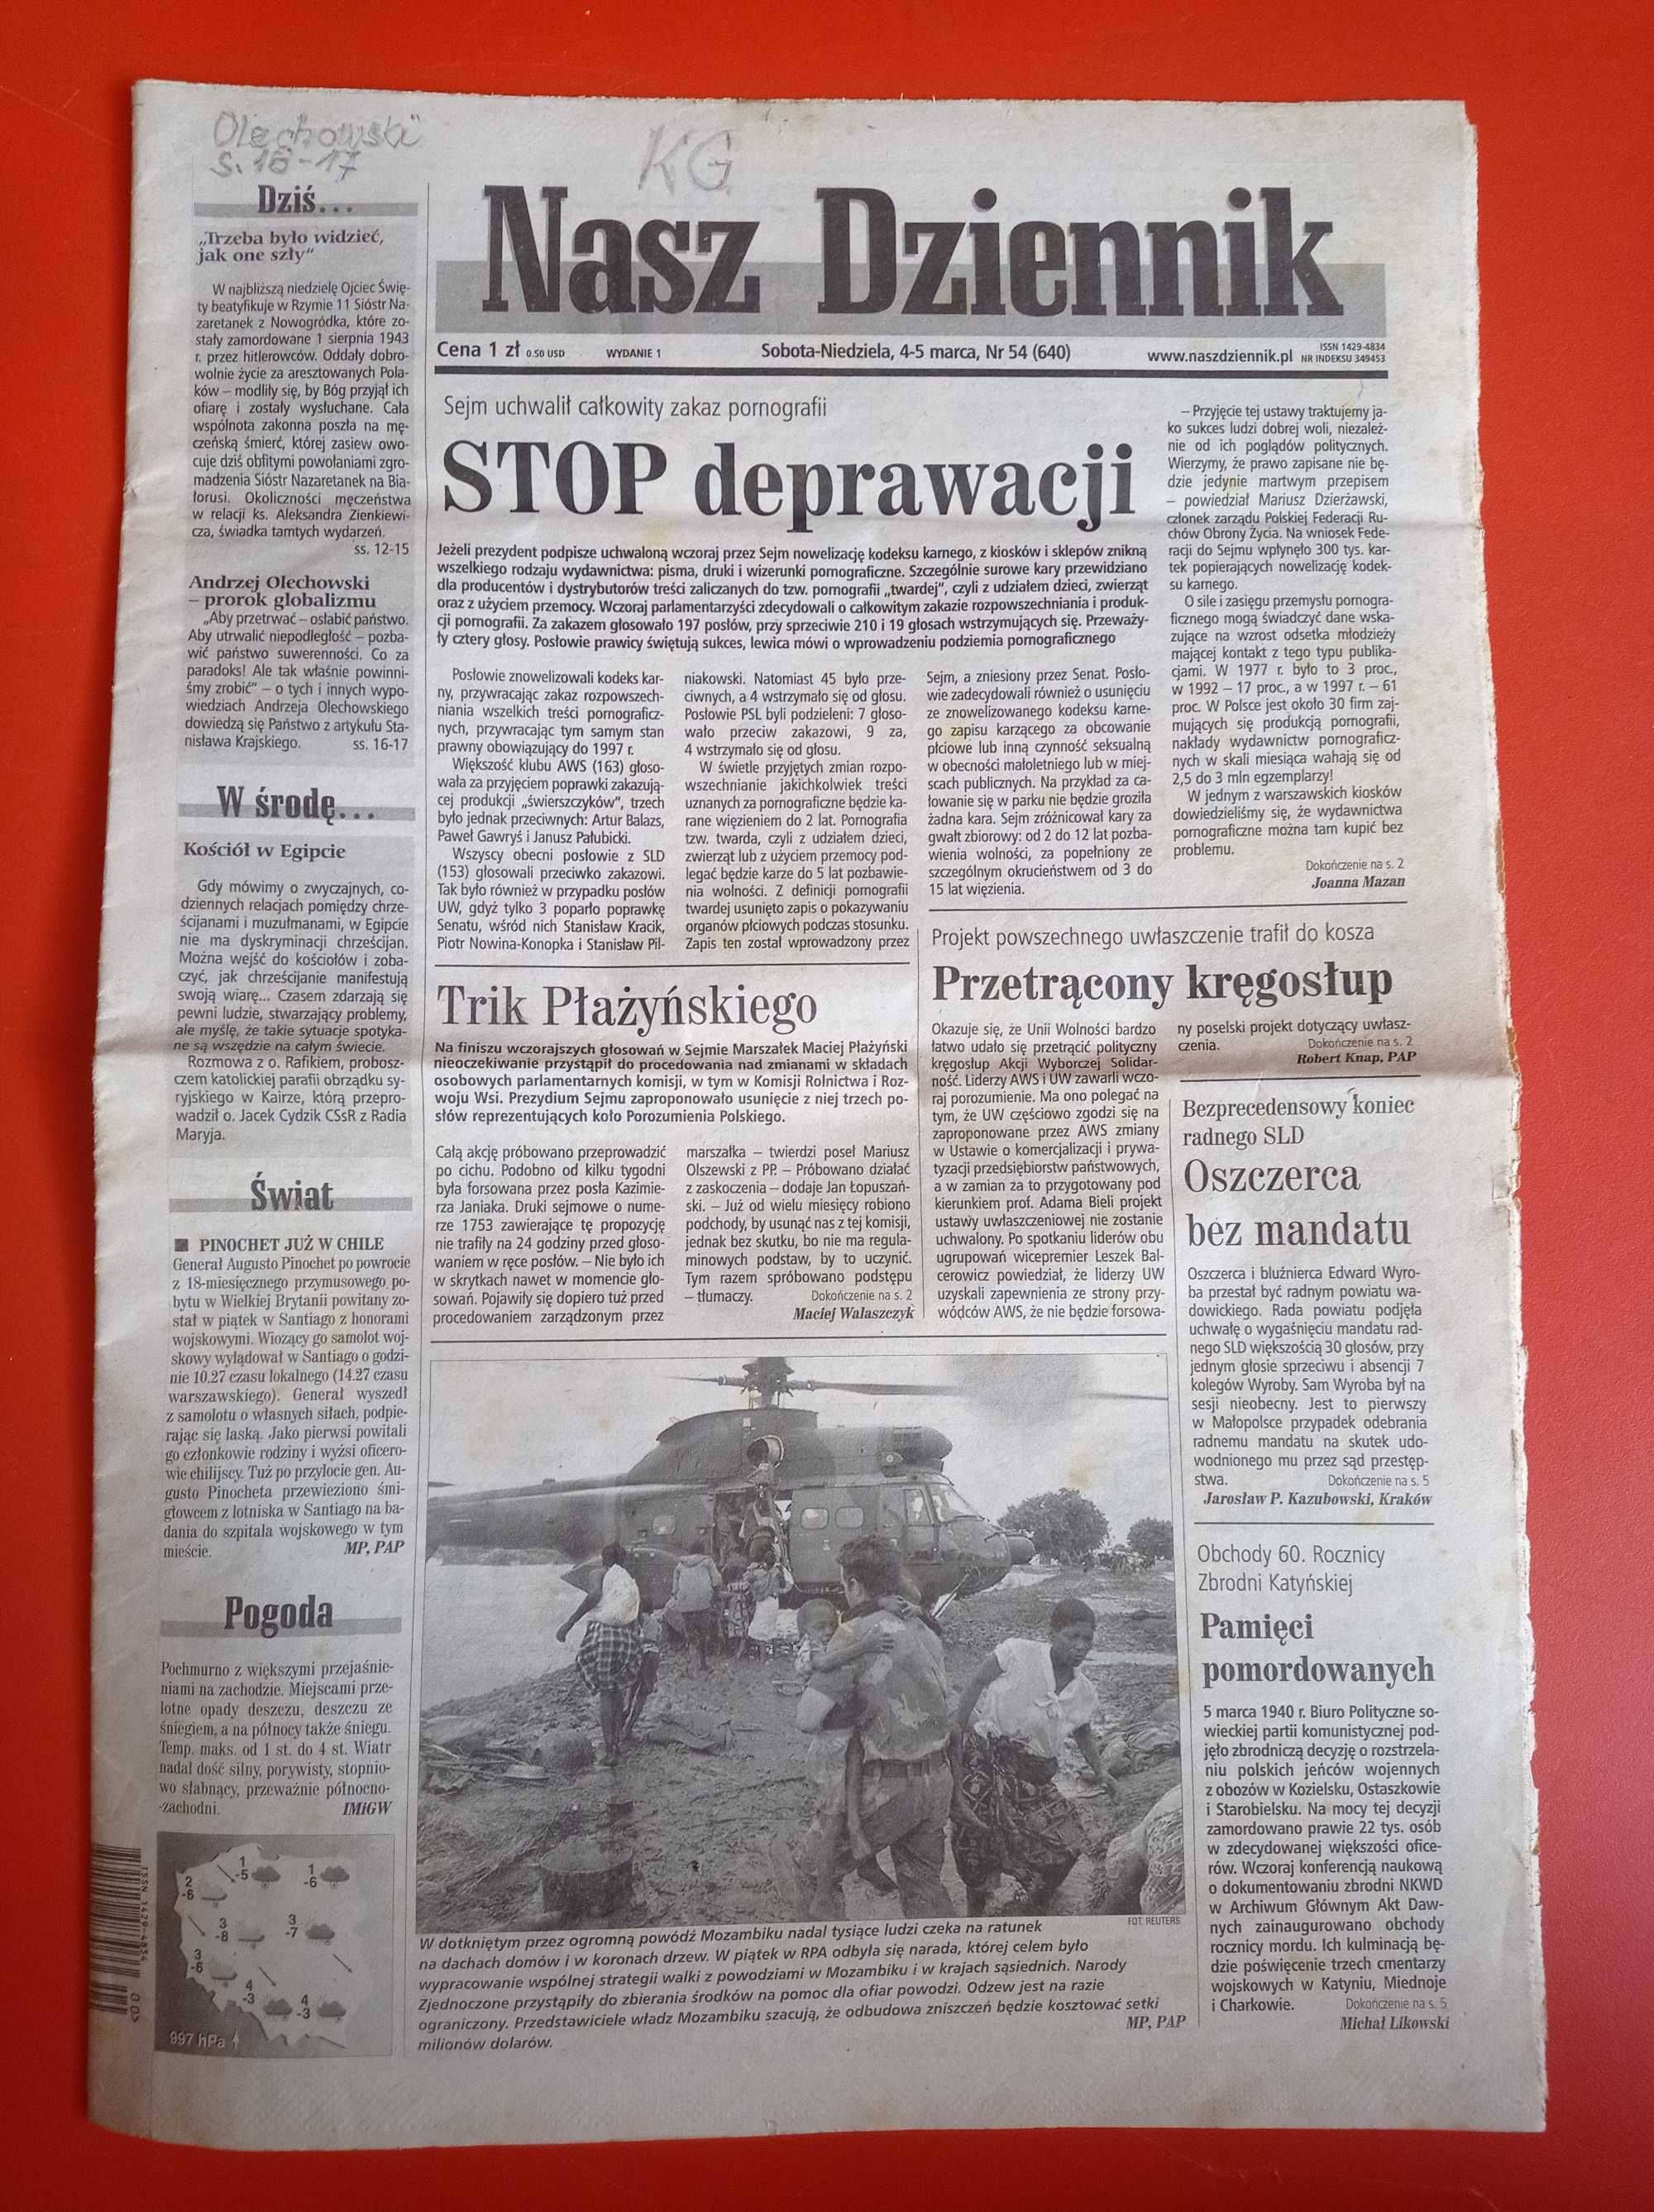 Nasz Dziennik, nr 54/2000, 4-5 marca 2000